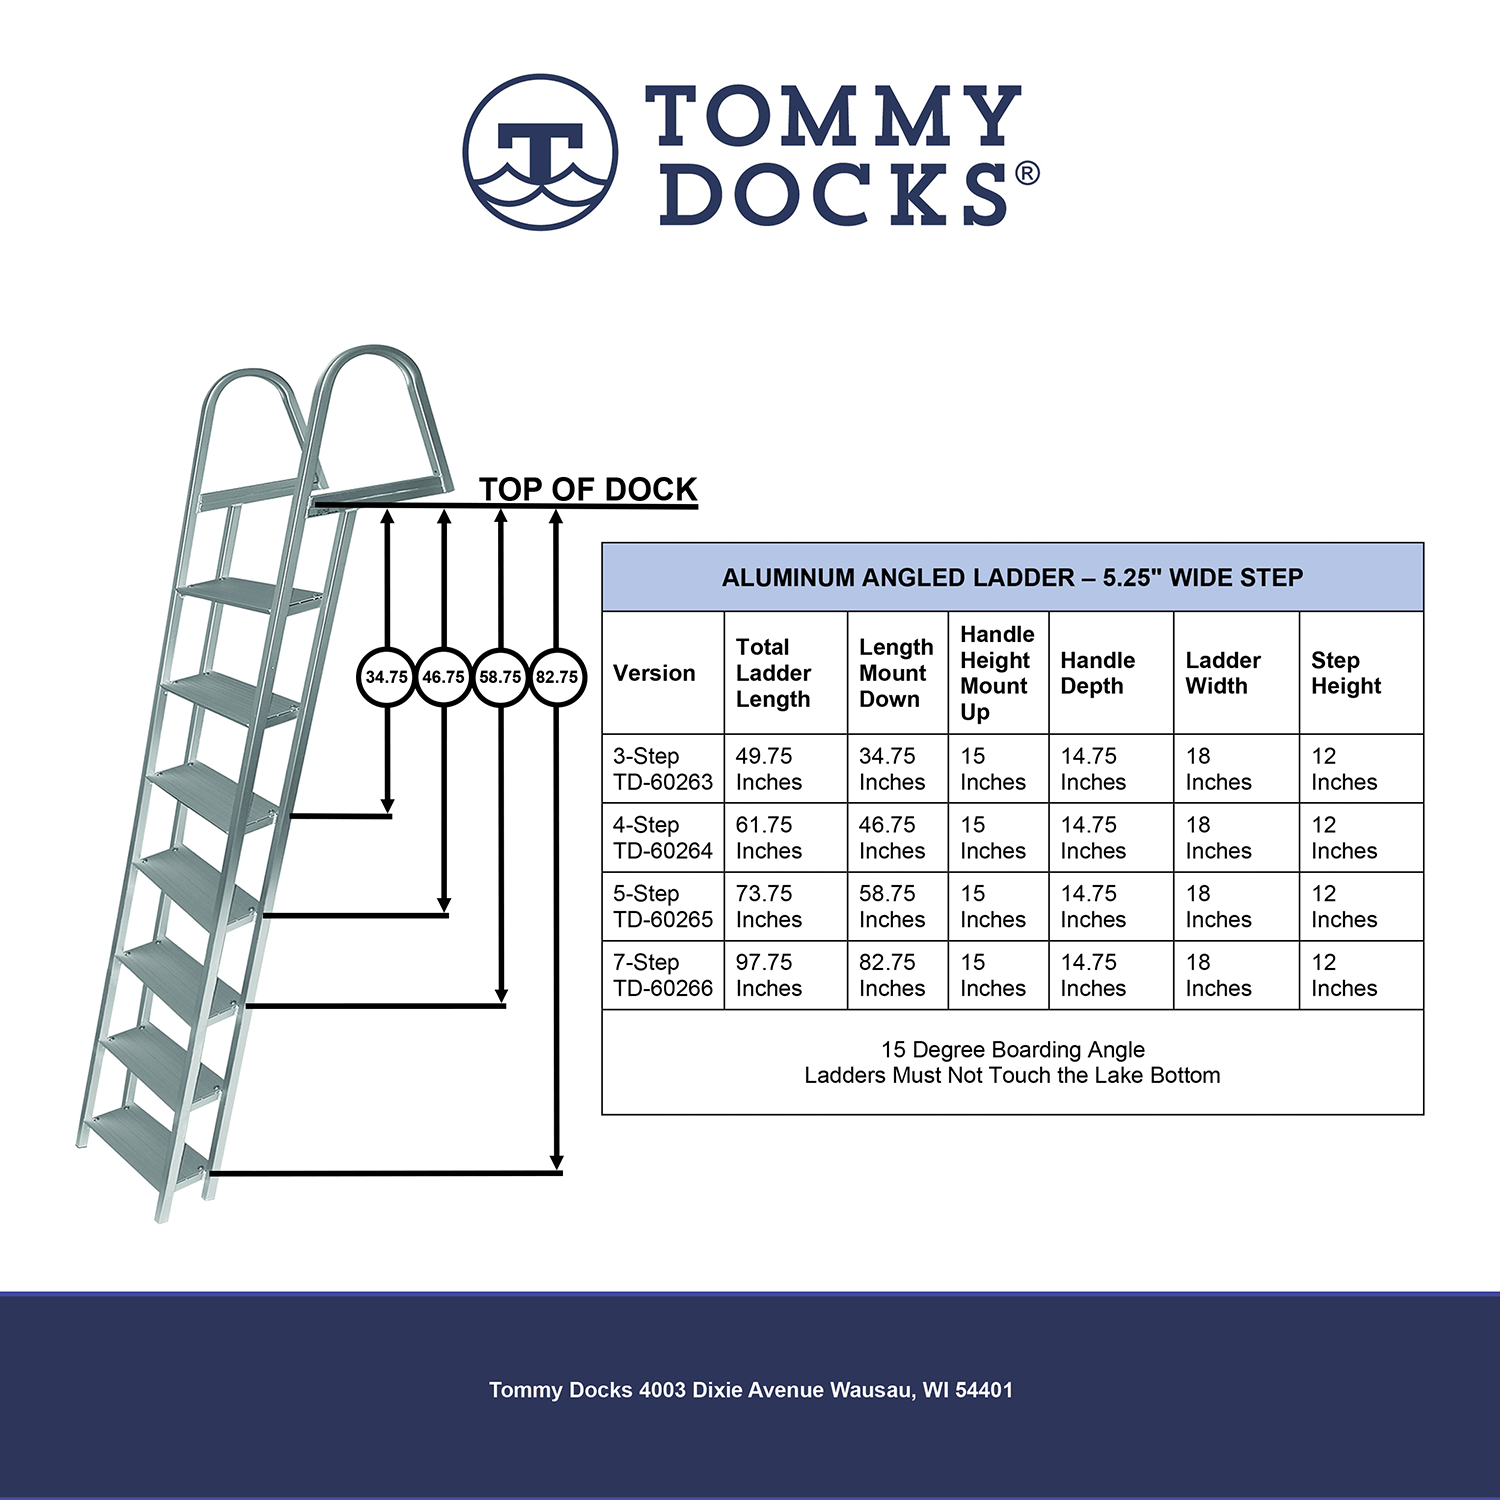 Aluminum Angled Folding Dock Ladder - 5.25” Wide Step - 2 Lengths Avai